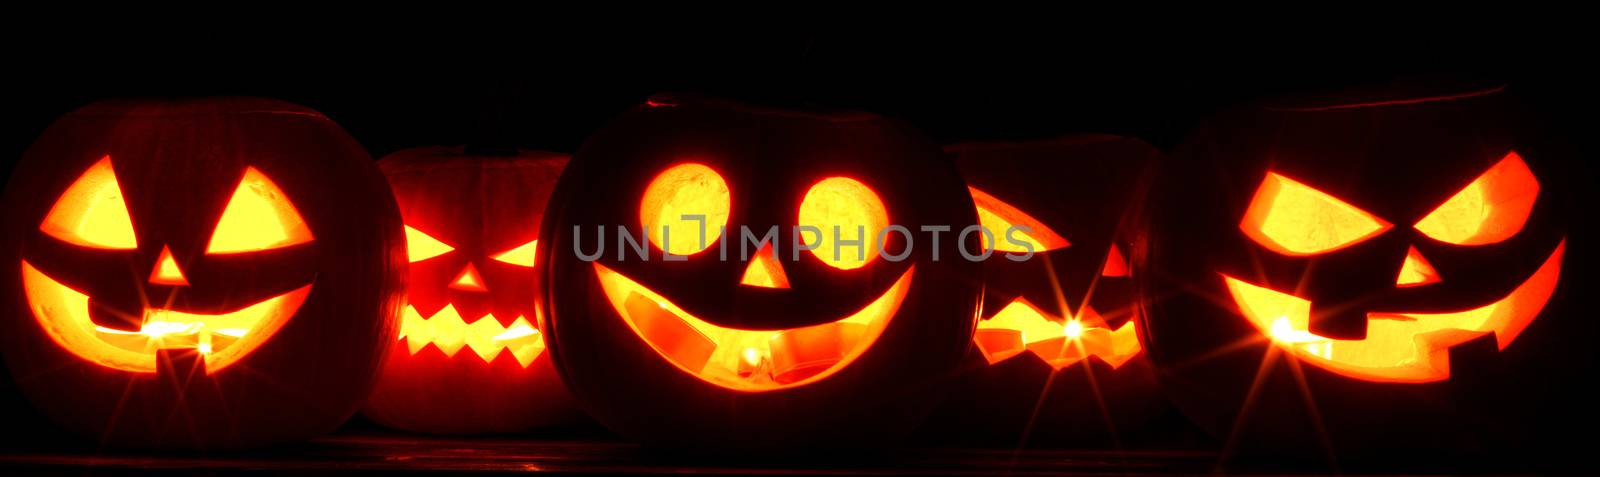 Halloween Pumpkin glowing faces in a row on dark background